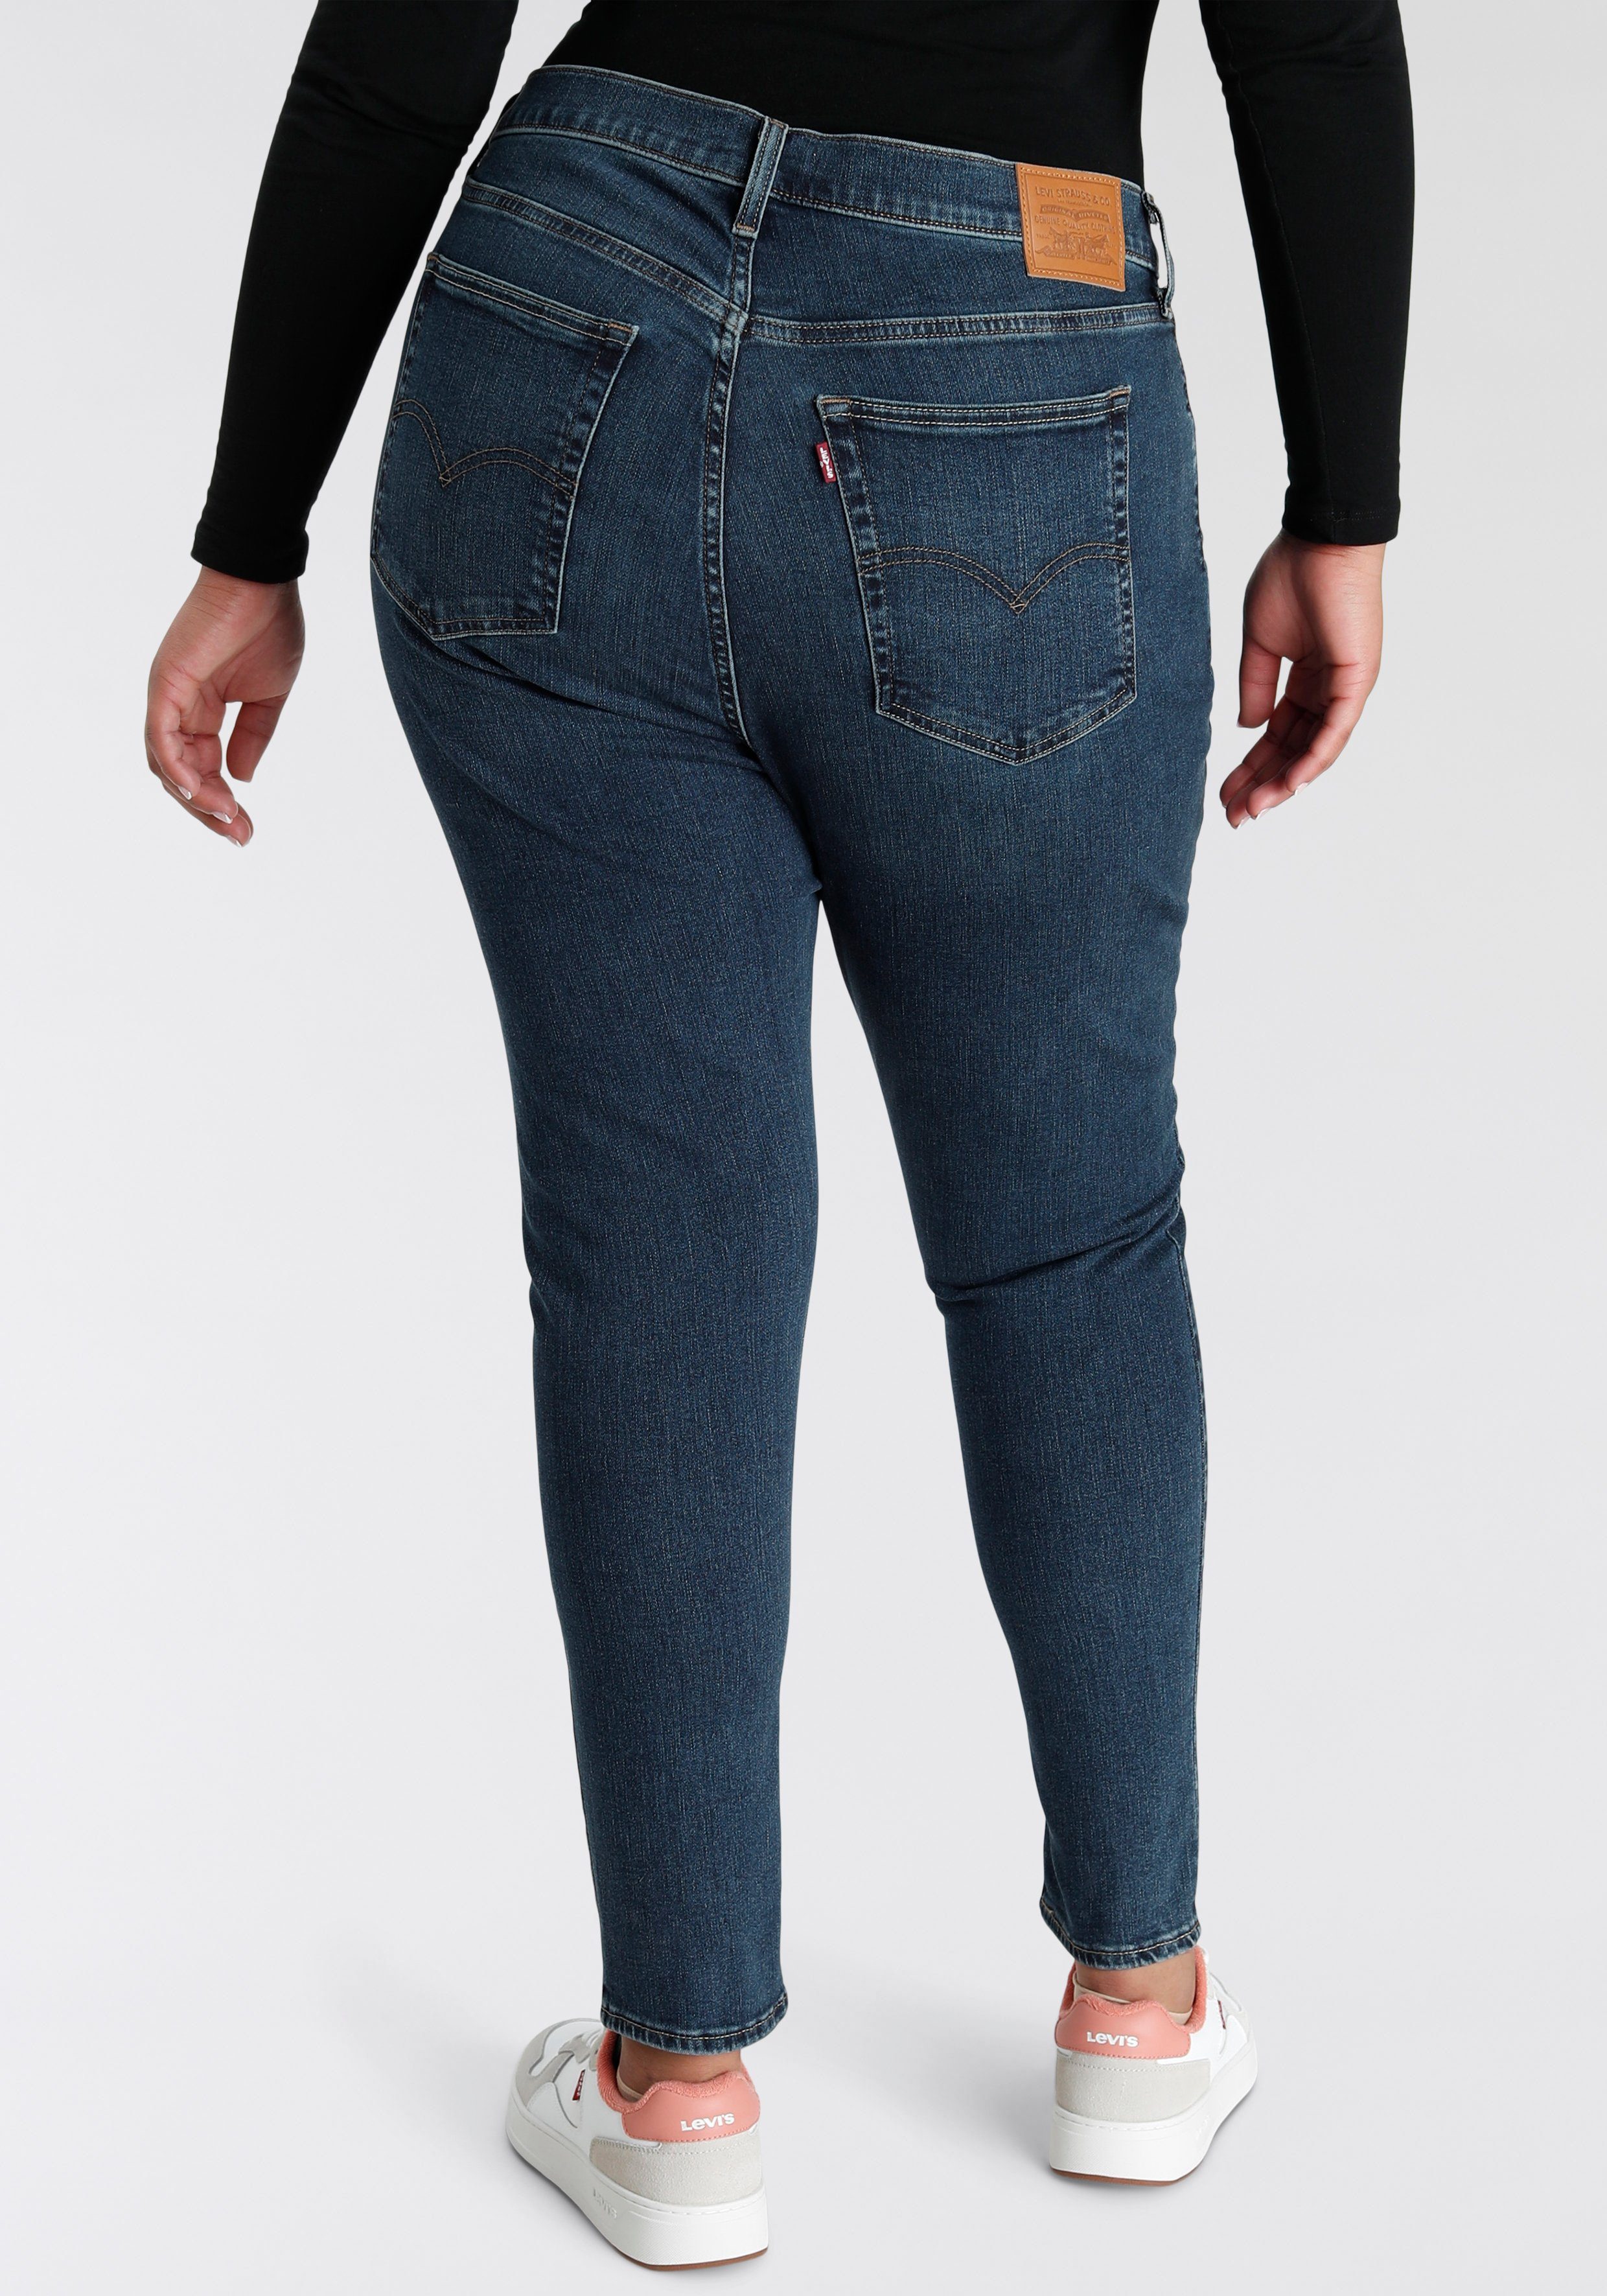 HI Levi's® sehr blue 721 PL dark Plus Skinny-fit-Jeans figurbetonter Schnitt RISE SKINNY